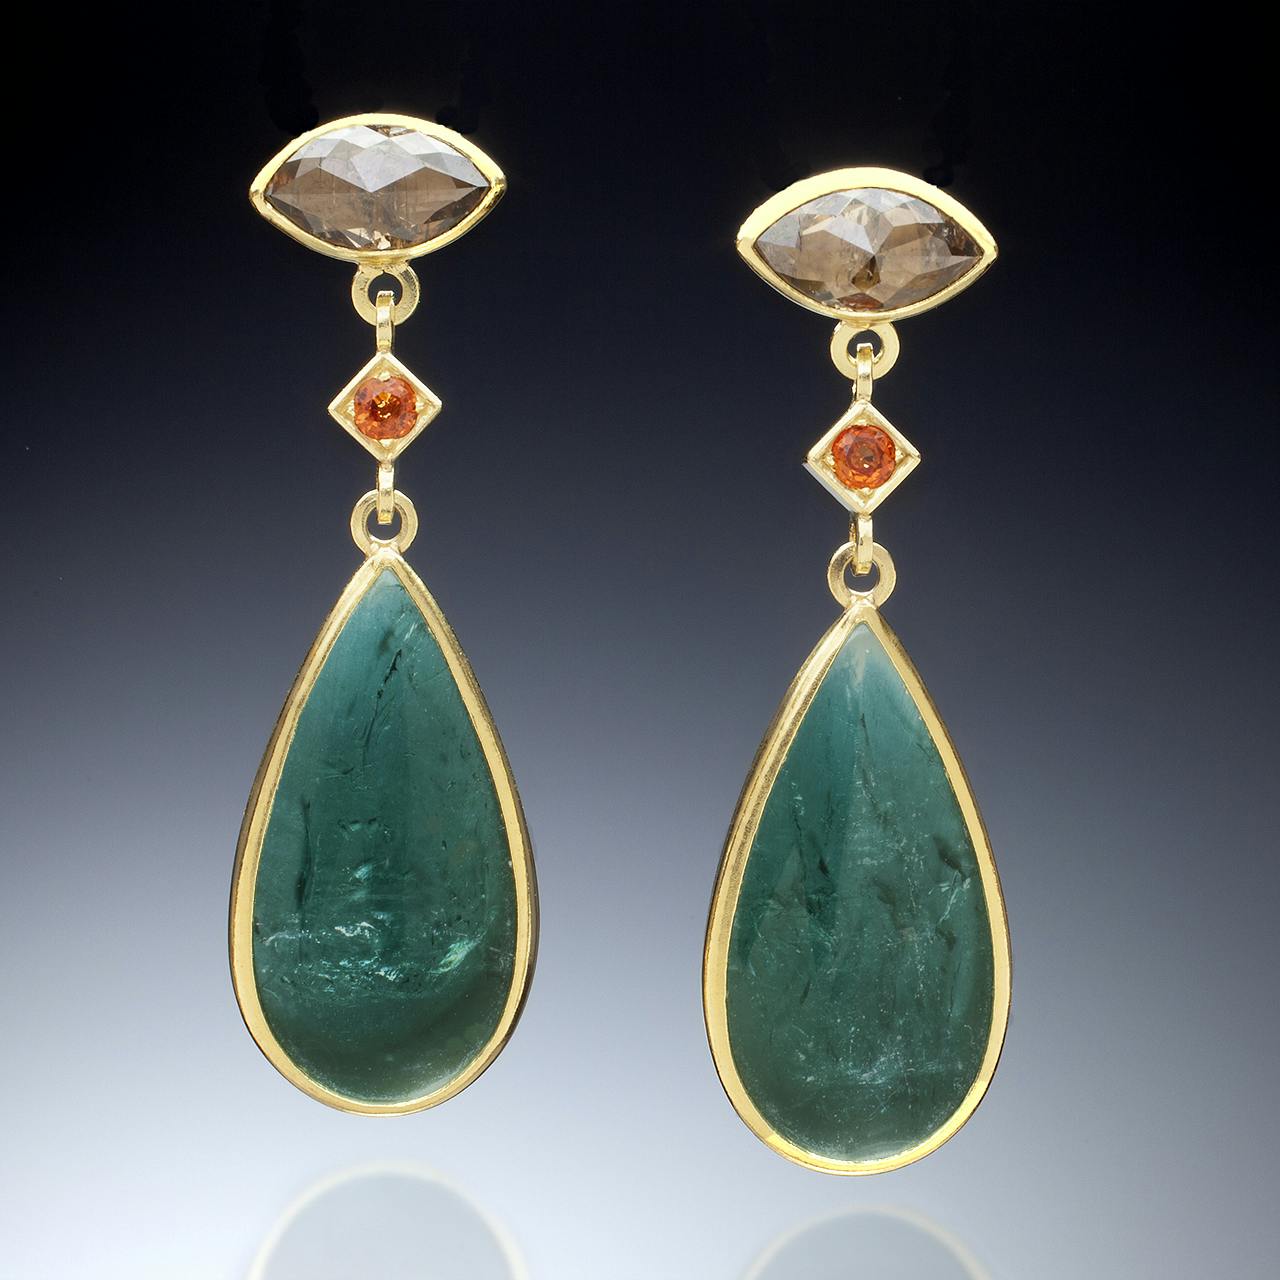 pair of handcrafted pendant earrings